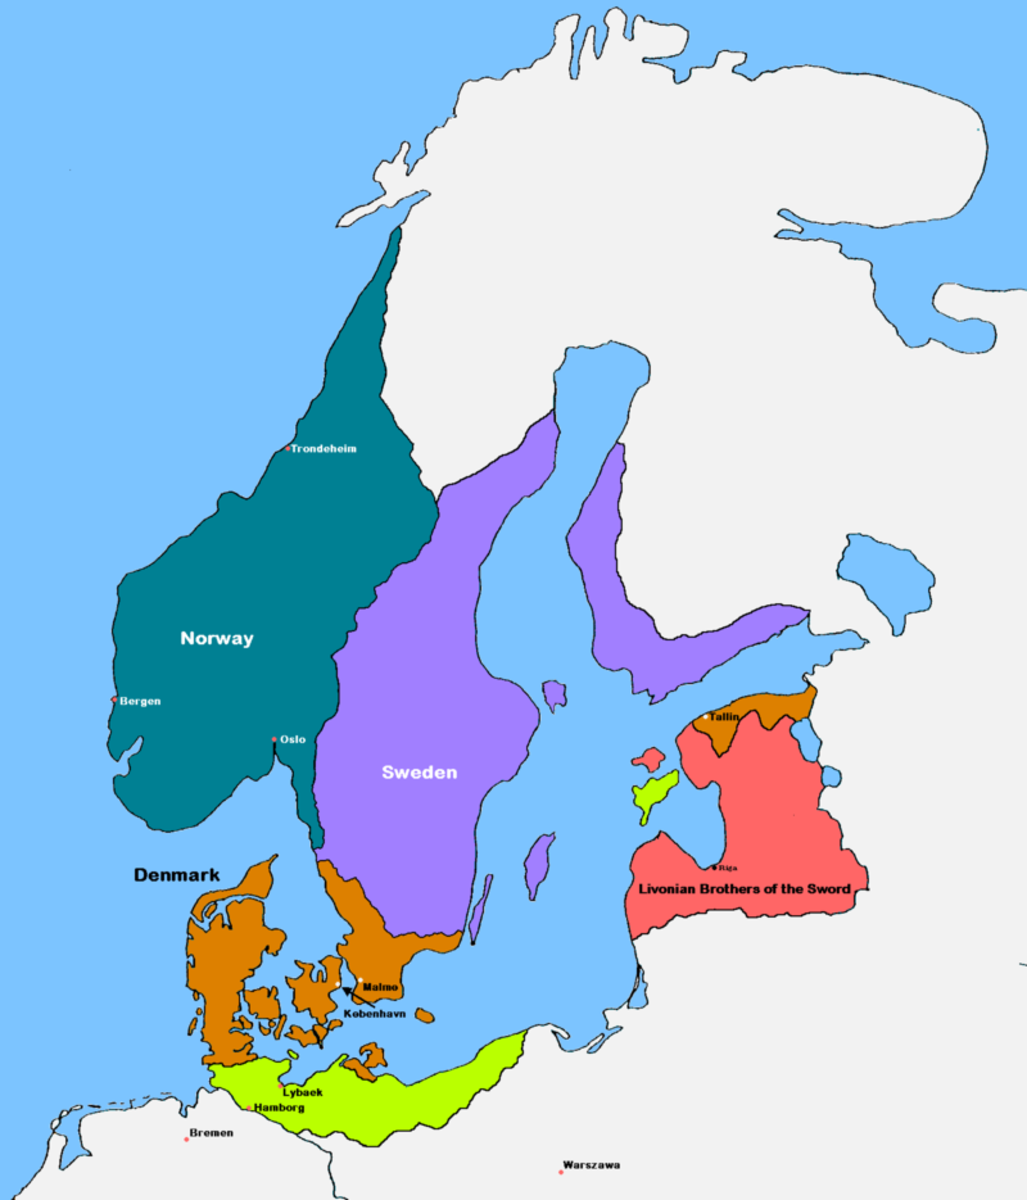 The Northern Crusades: Europe's Last Pagan Kingdoms